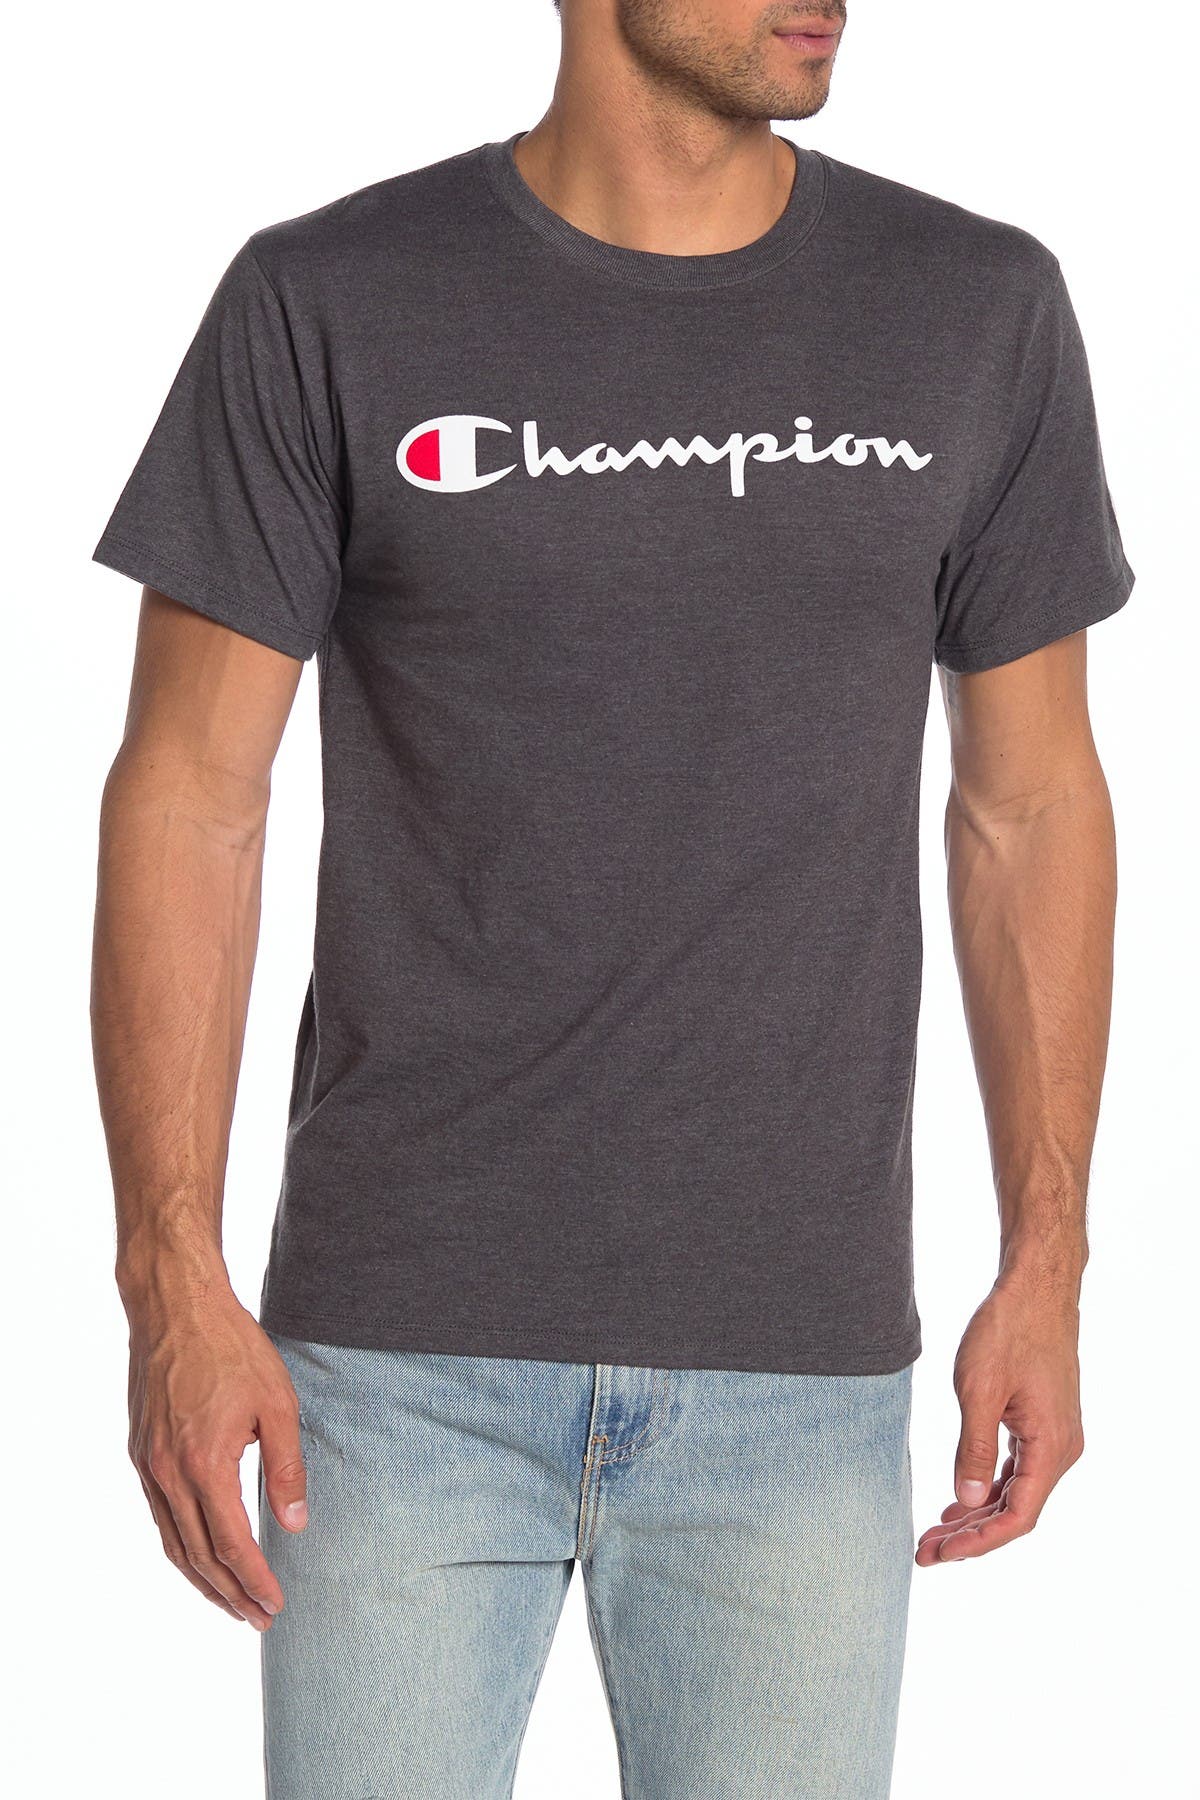 Champion Logo Print Mens T-Shirt Black Short Sleeve Top Fashion Tee 